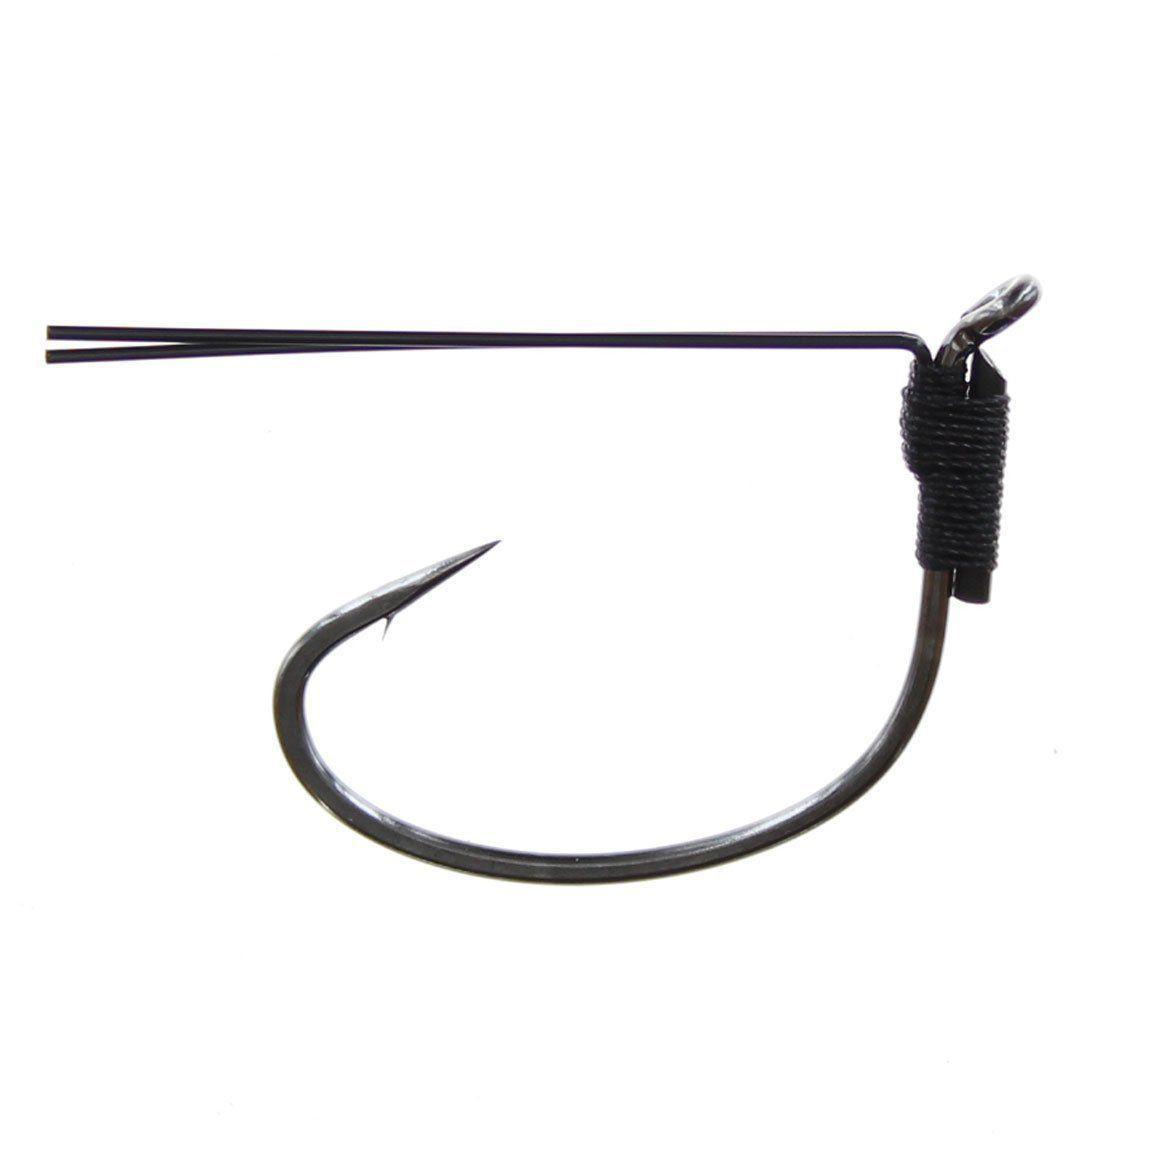 Gamakatsu B10S Stinger Hooks 1/0 Black